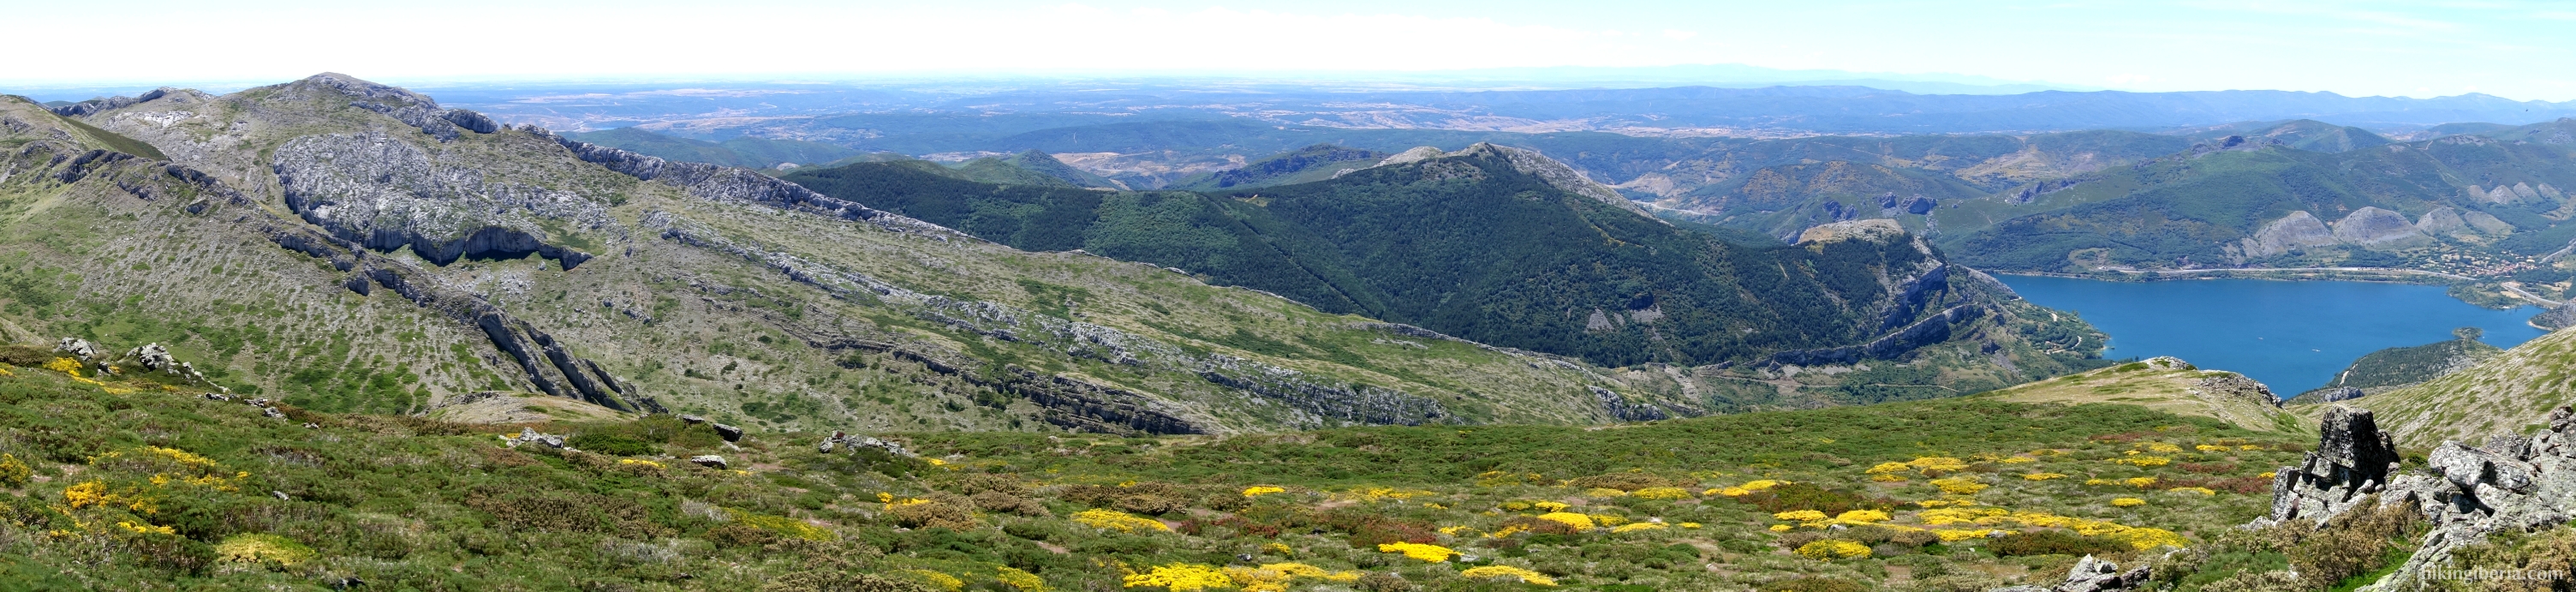 Cerro Pedroso